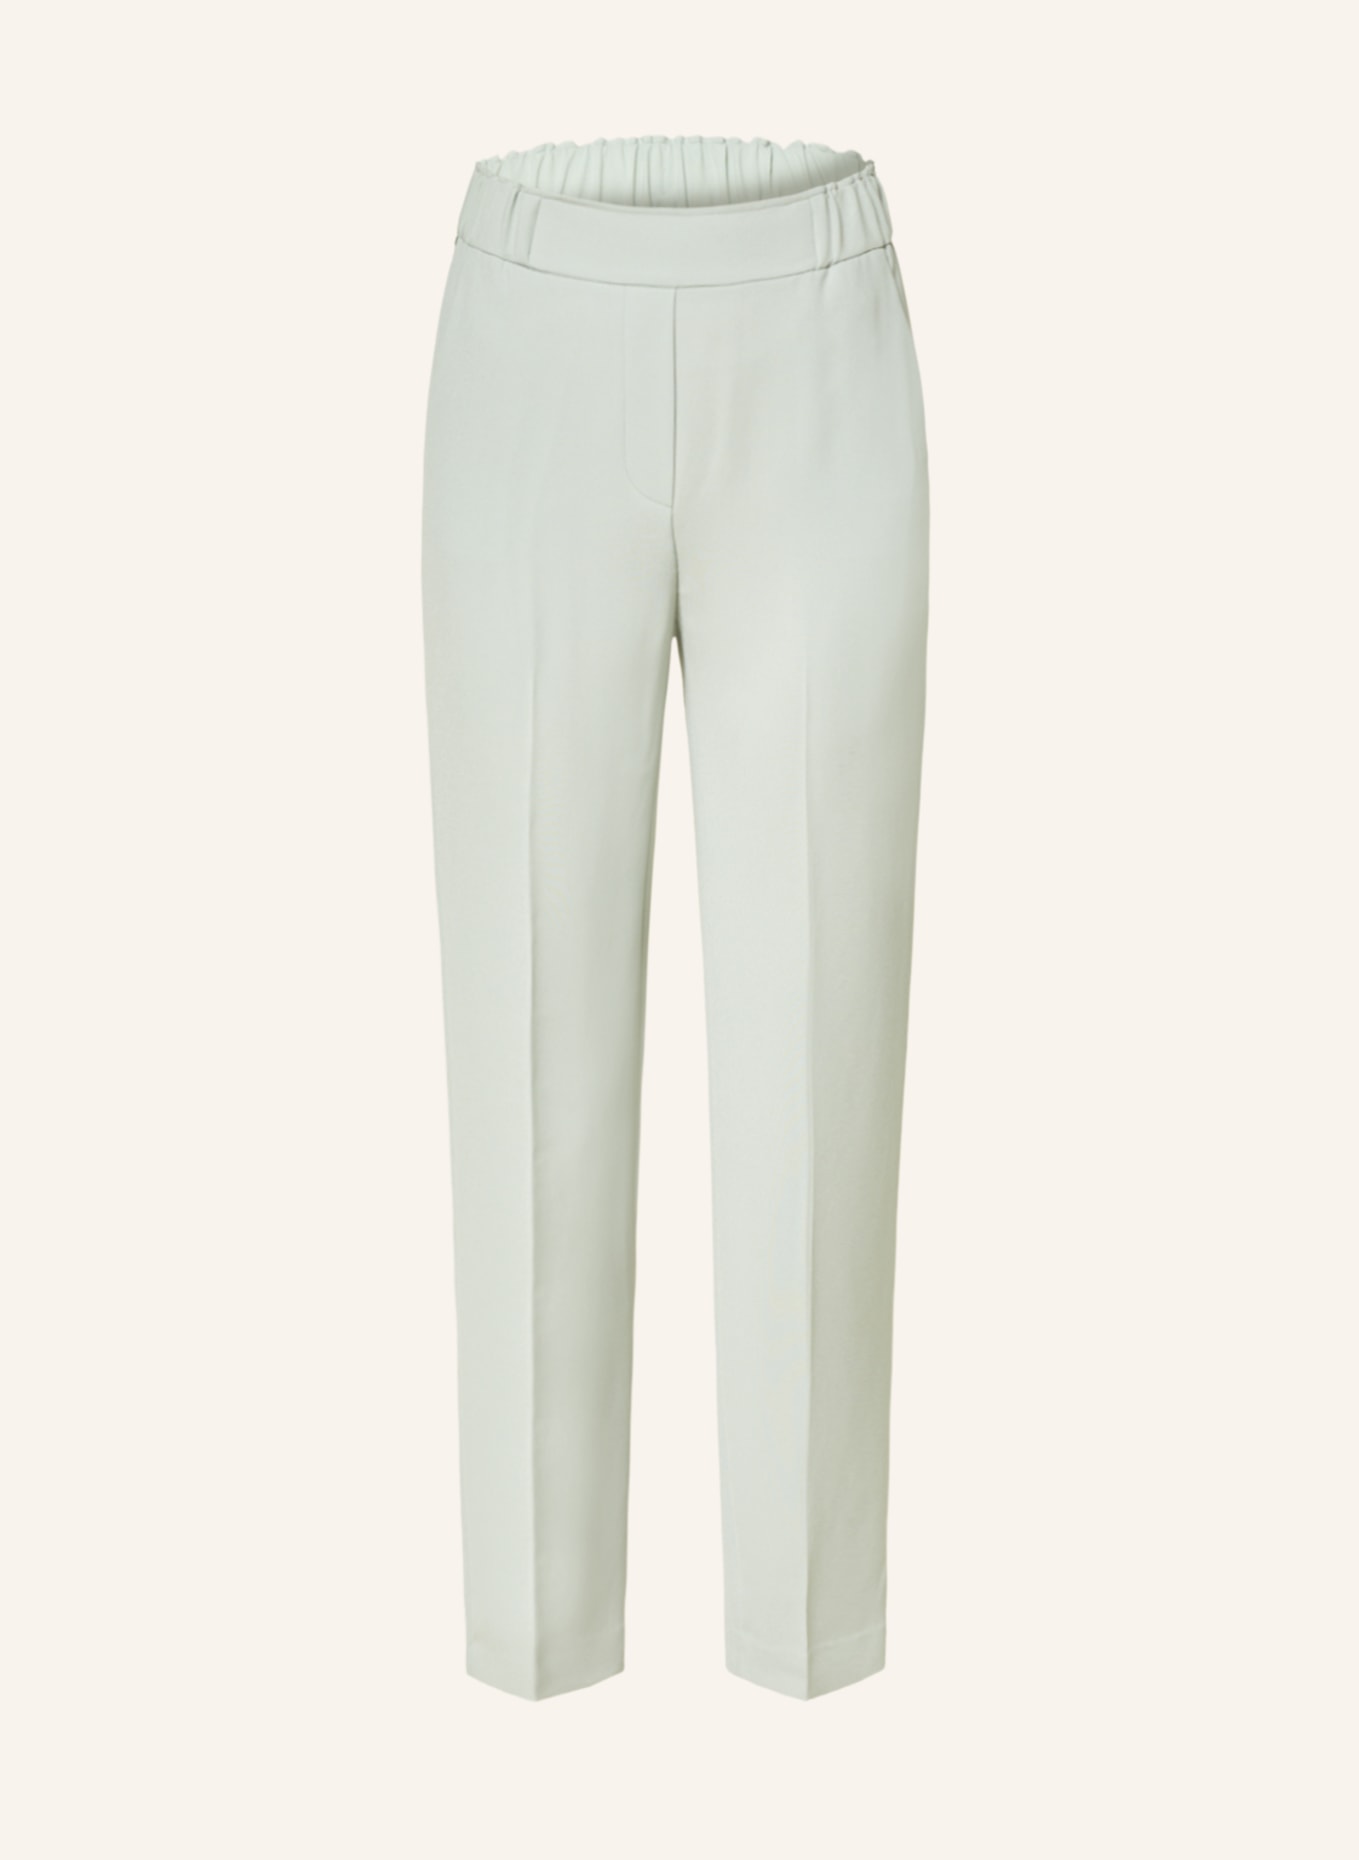 ANTONELLI firenze Trousers, Color: MINT (Image 1)